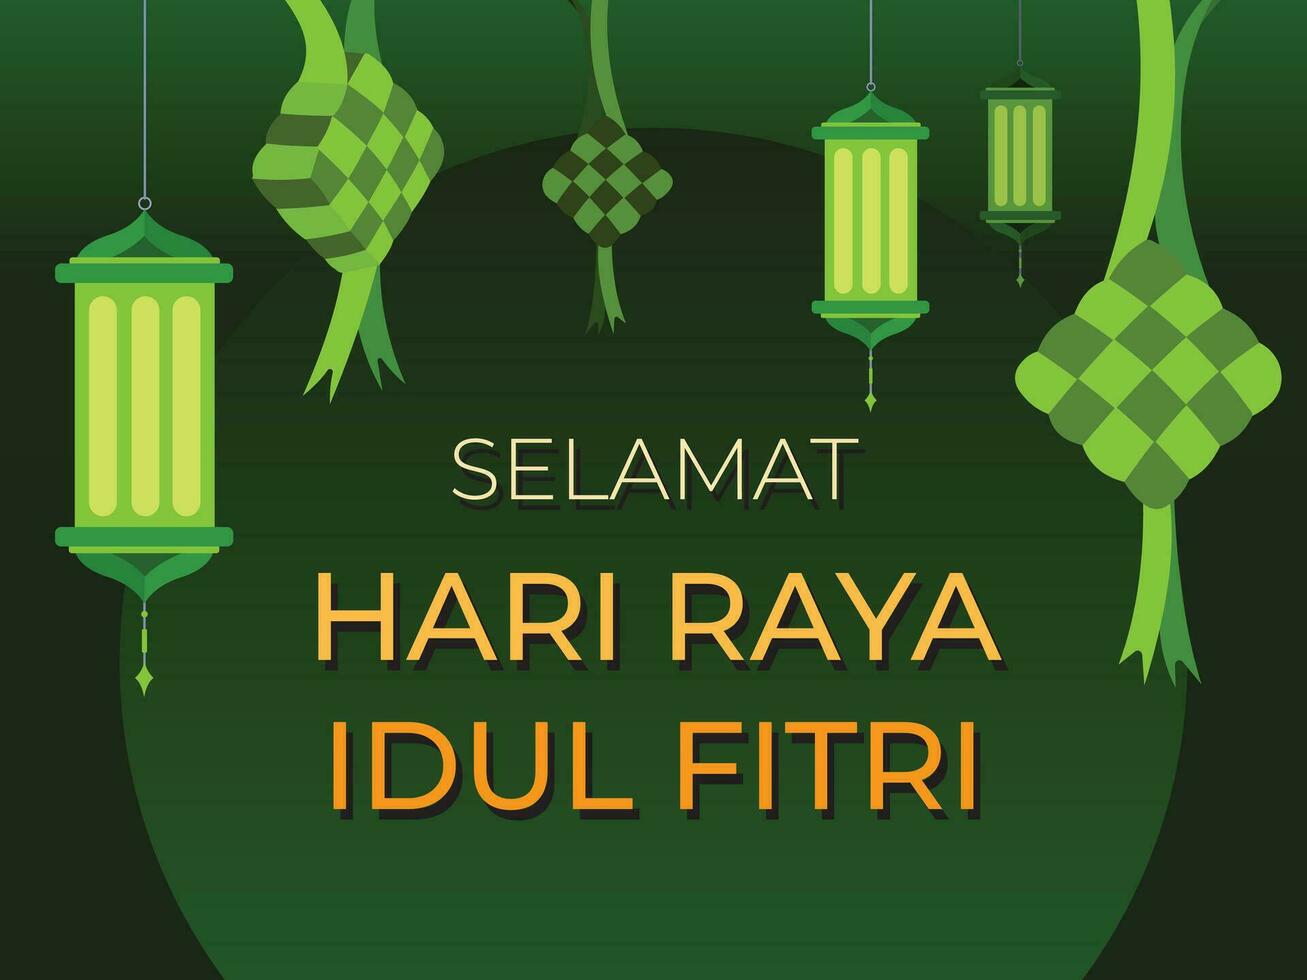 Islamic eid mubarak ramadhan kareem template with ketupat lebaran and lanterns themed green vector illustration horizontal background. Selamat hari raya idul fitri indonesia style.